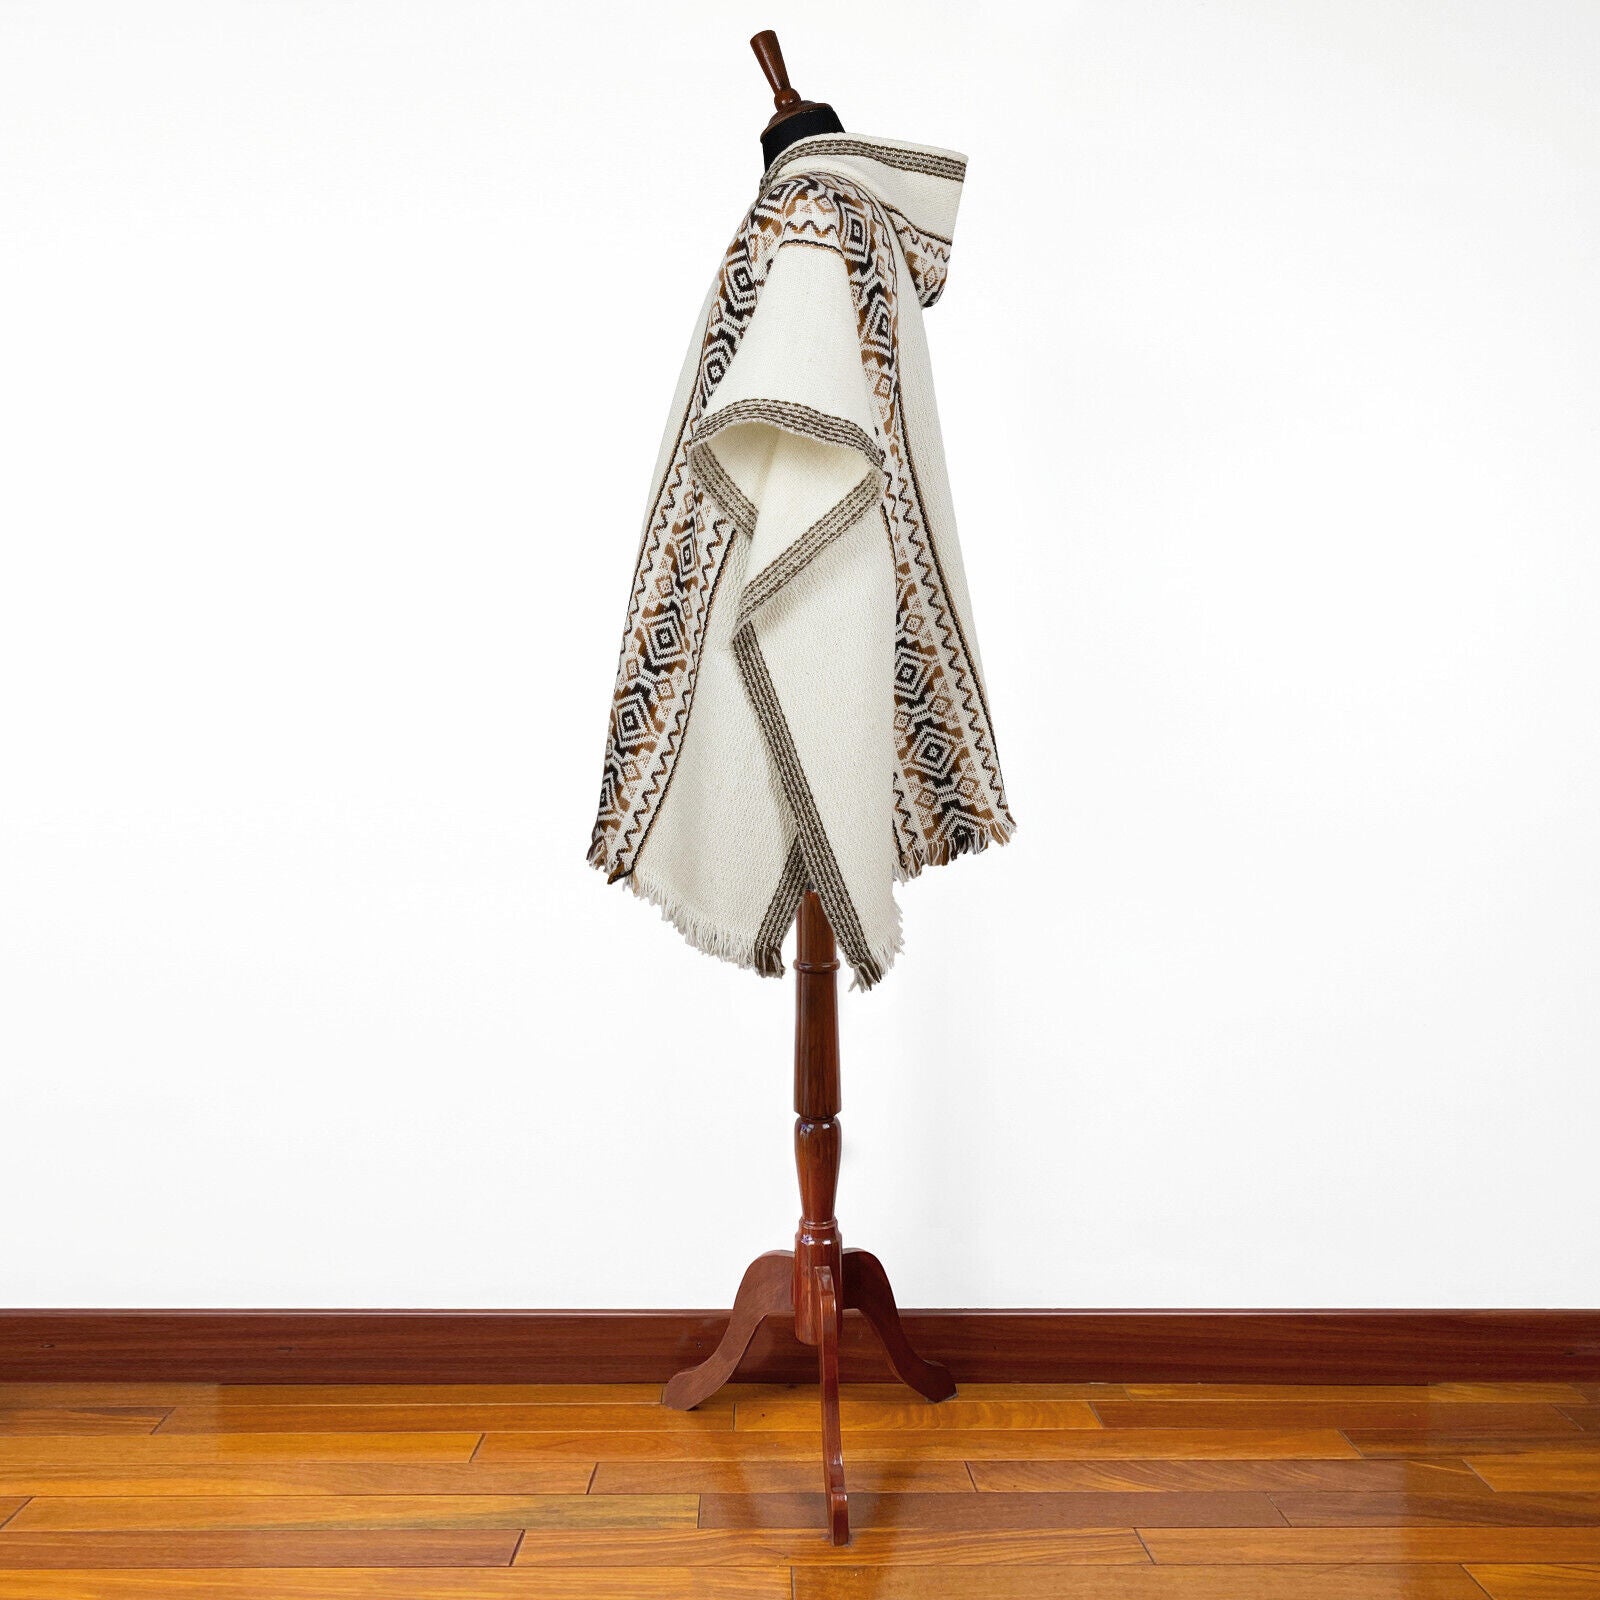 Guanabana - Llama Wool Unisex South American Handwoven Hooded Poncho - white with diamonds pattern